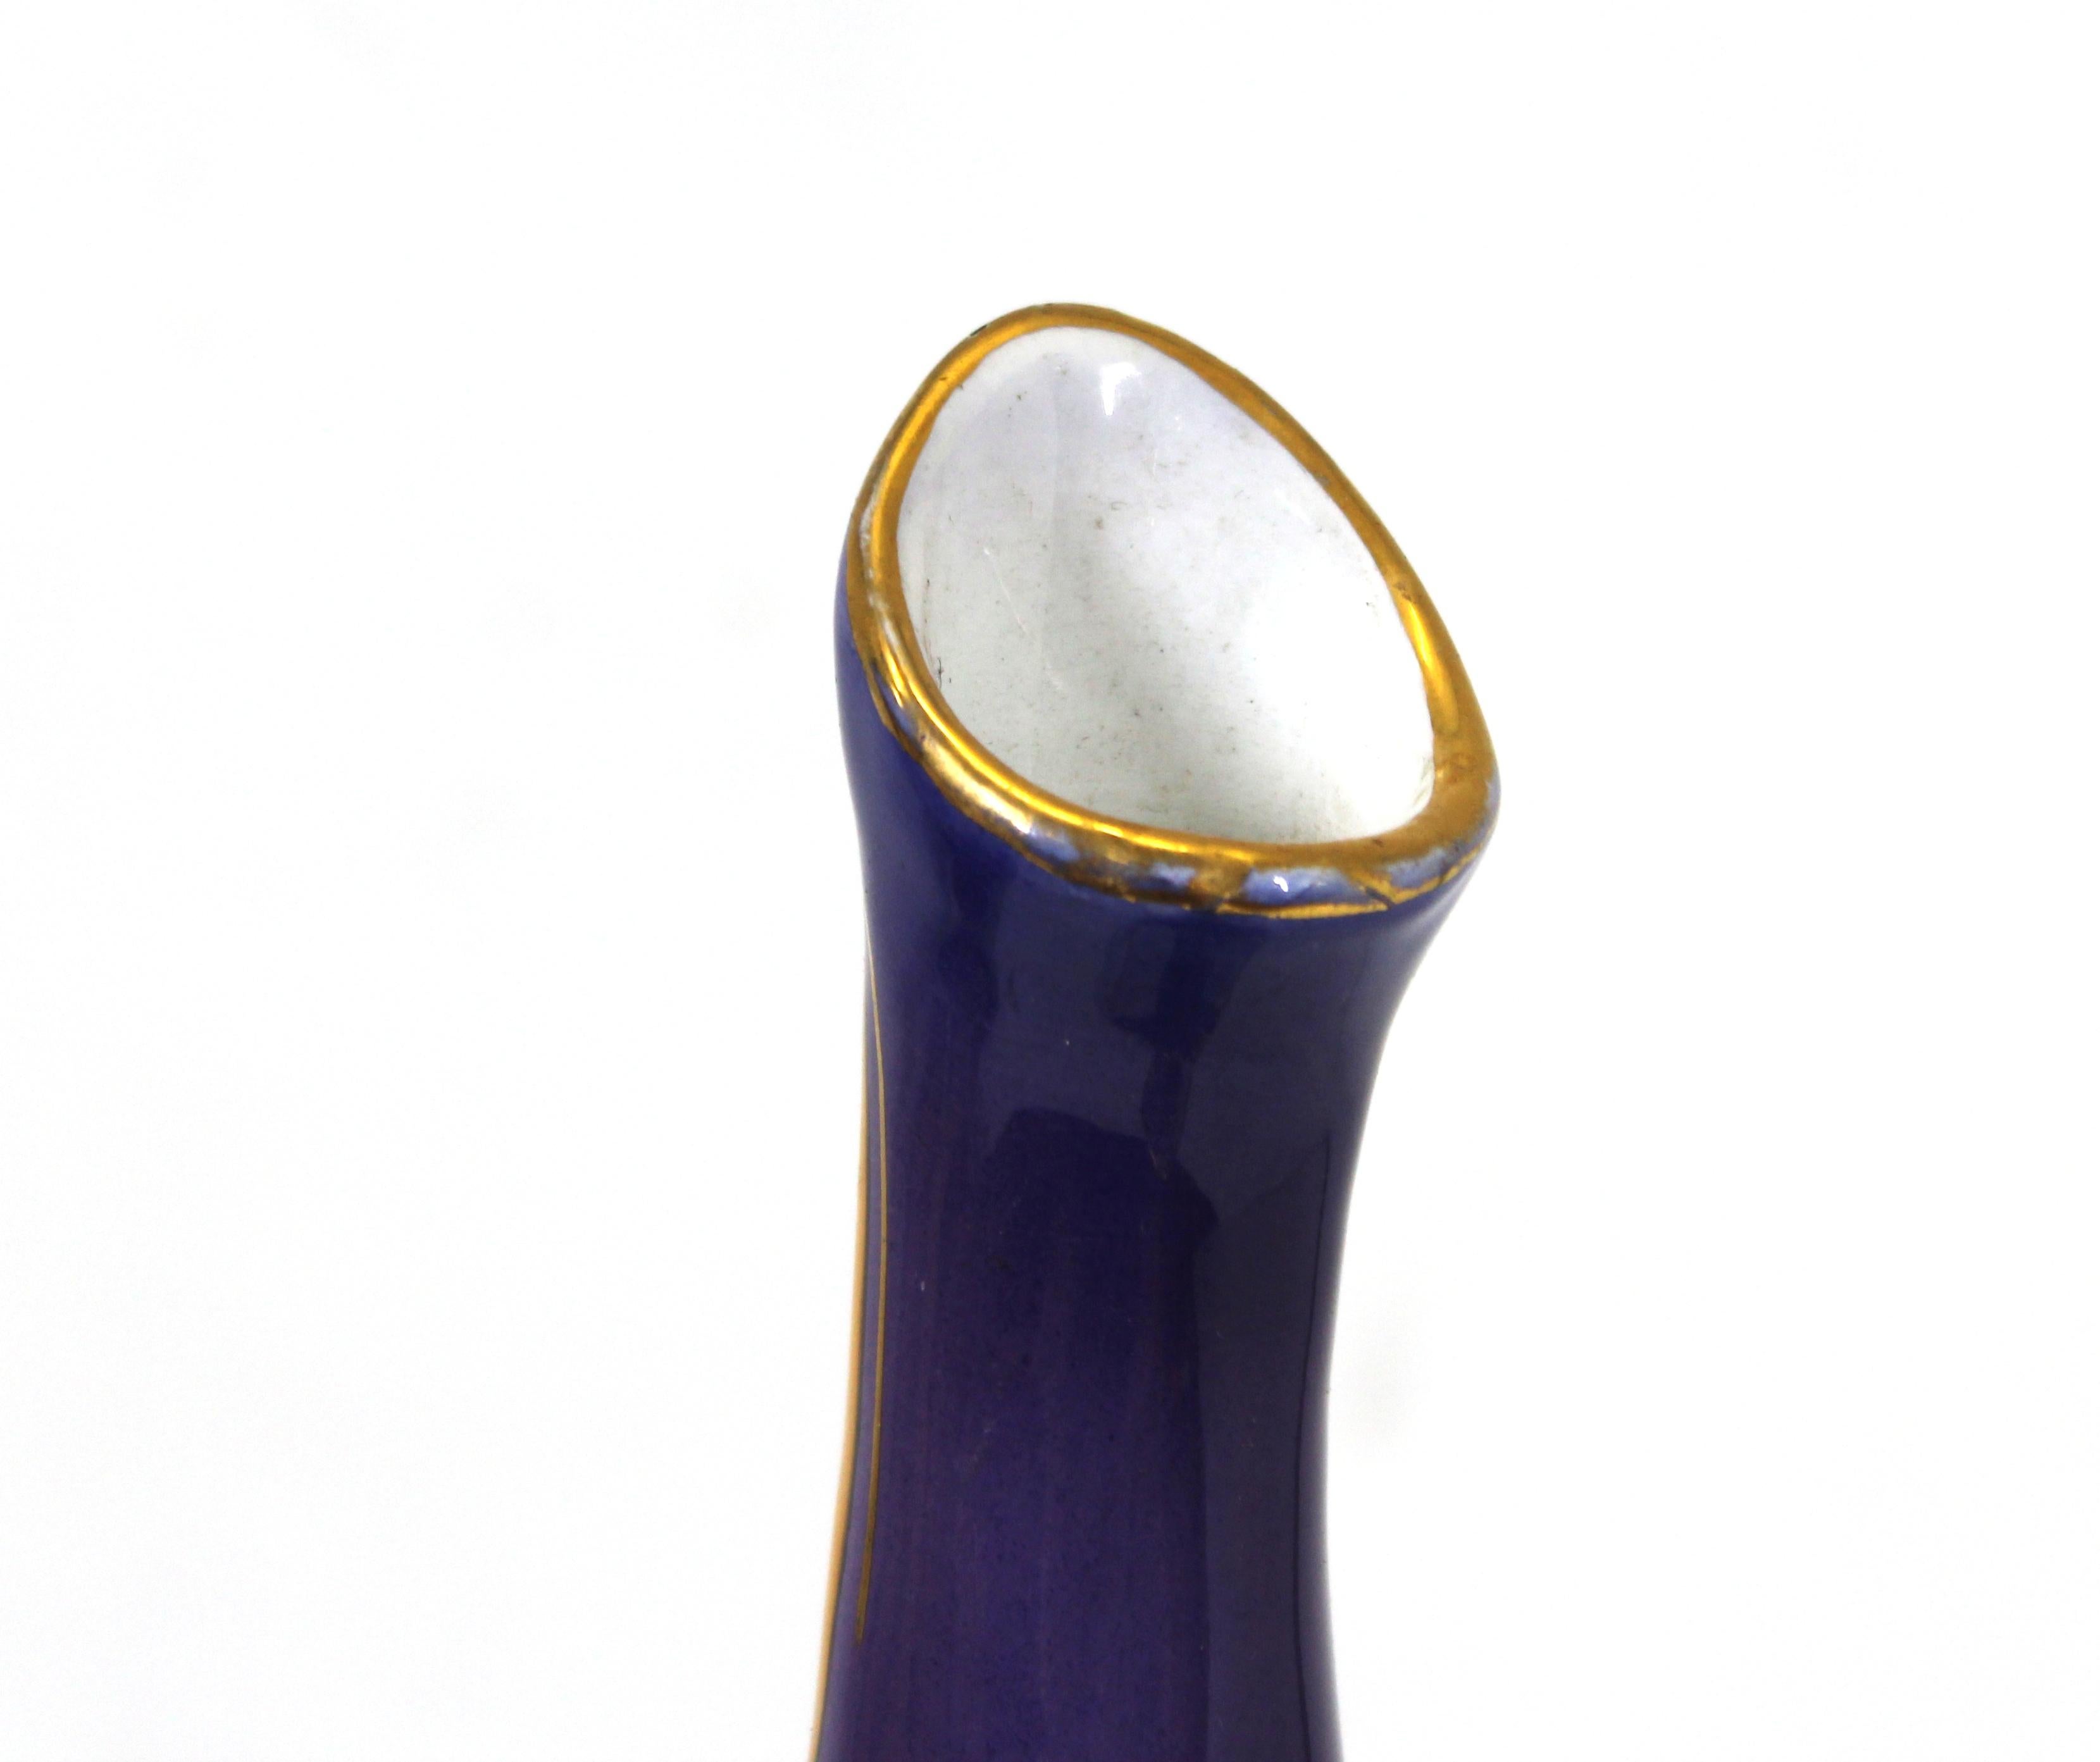 Italian Modernist Whimsical Glazed Ceramic Vase with Gold Detailing For Sale 4